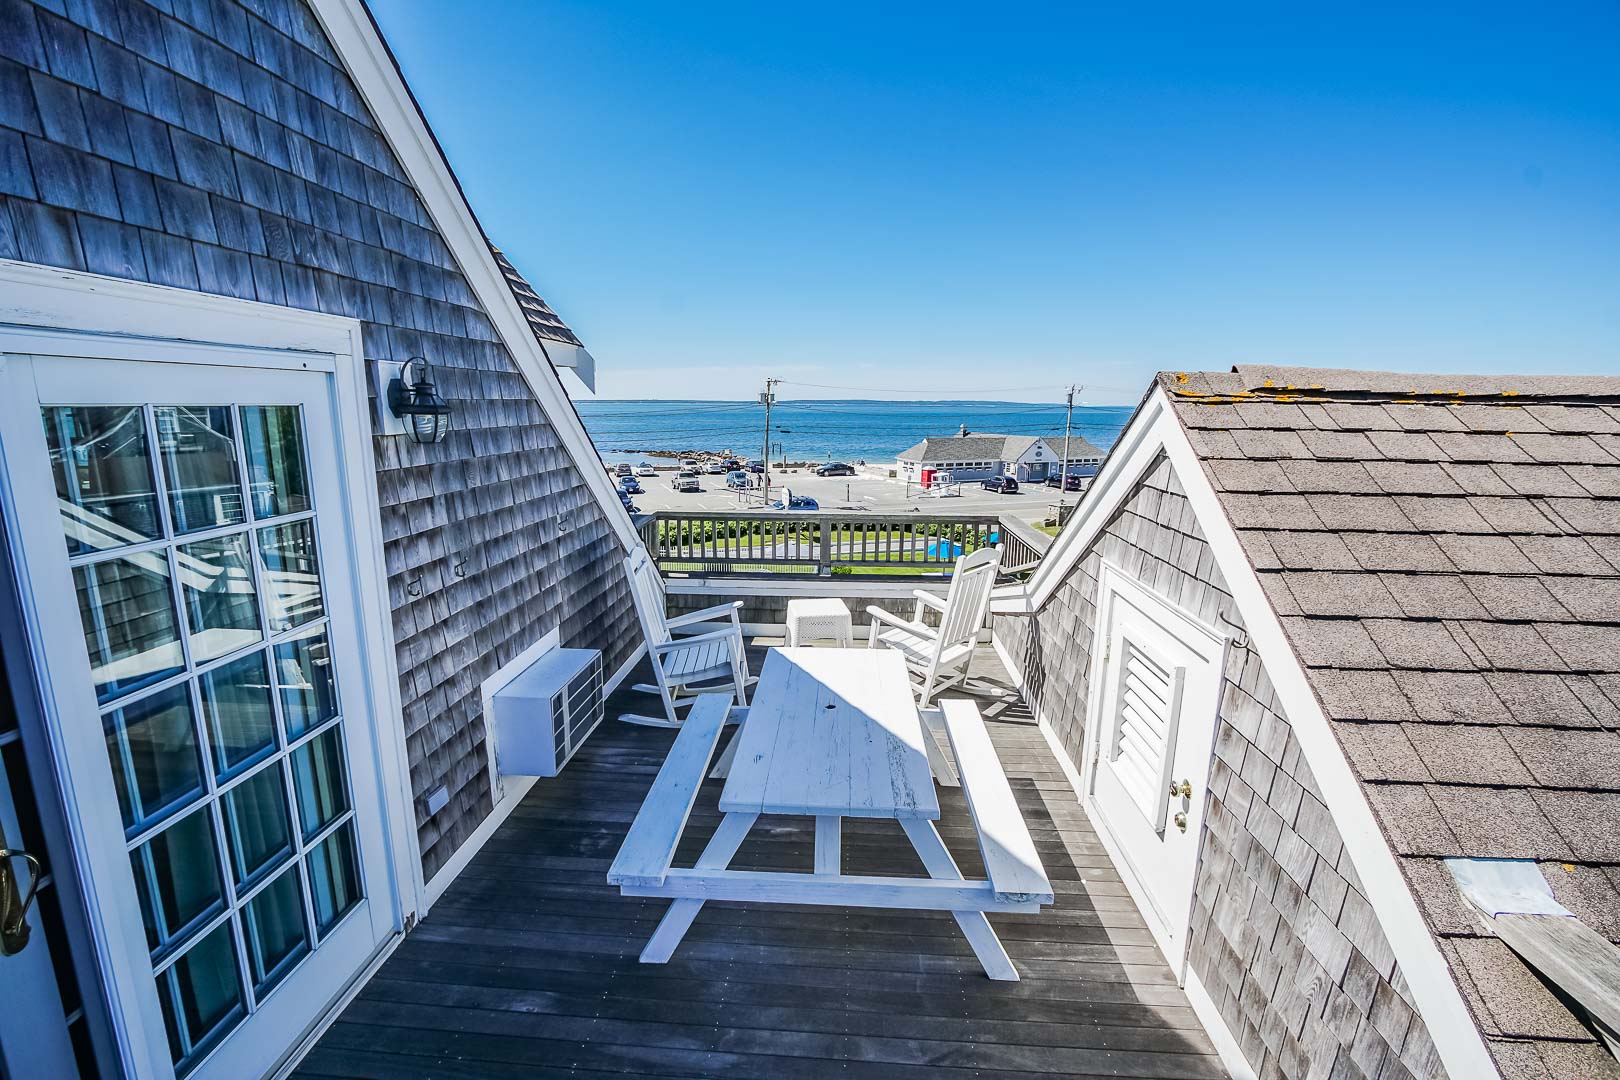 A serene beach view from the balcony at VRI's Beachside Village Resort in Massachusetts.